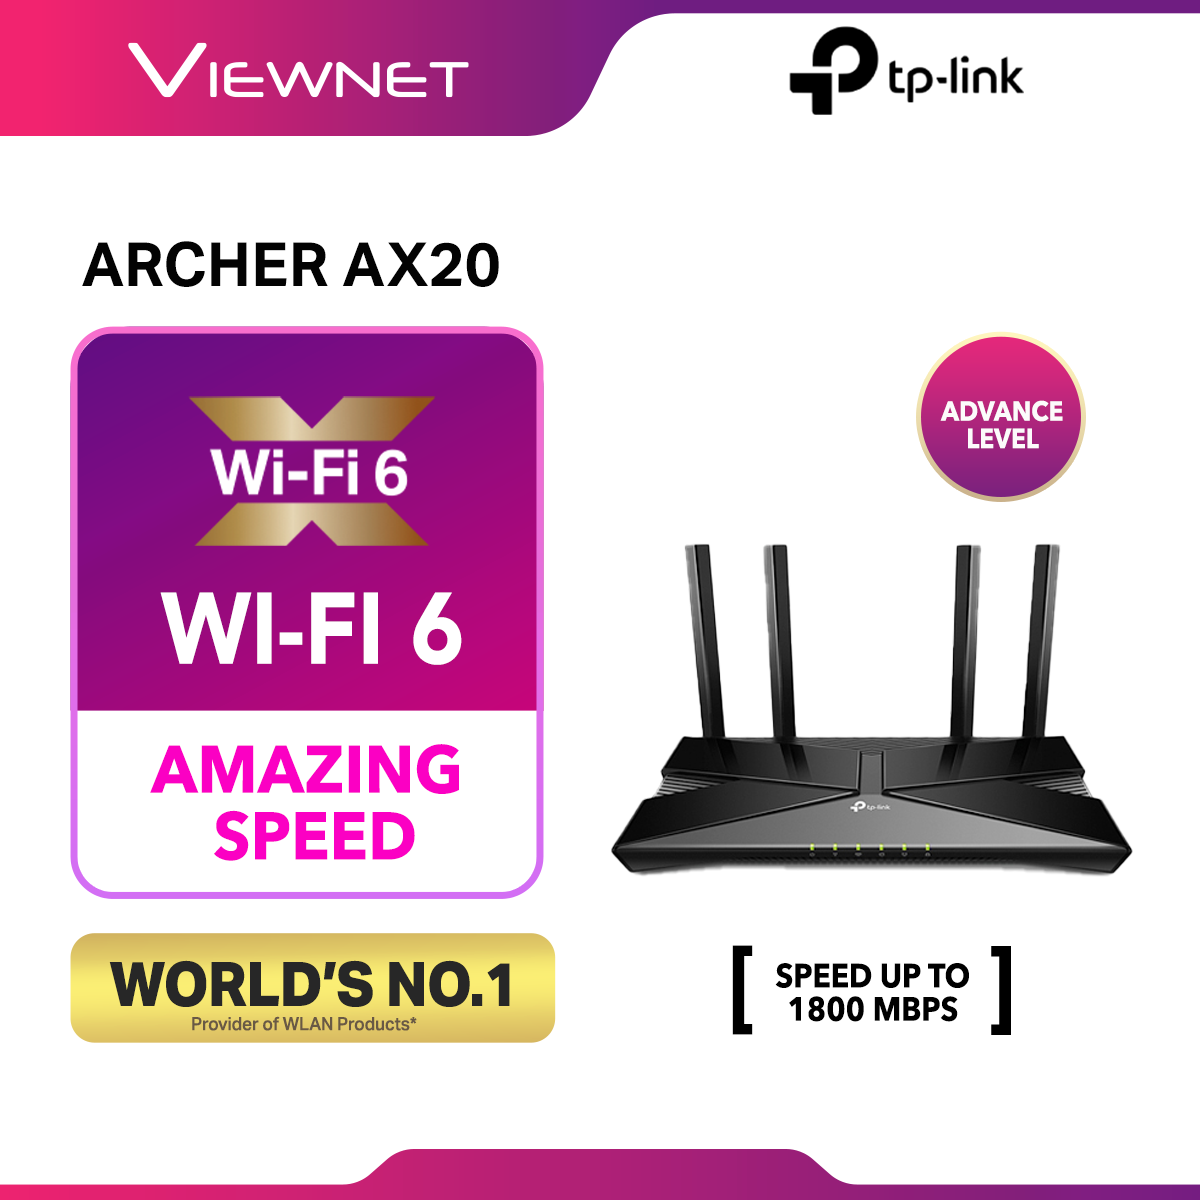 TP-Link Archer AX20 AX1800 WiFi 6 Router + TX20U Plus Adapter Combo (PWP TX20U Plus)